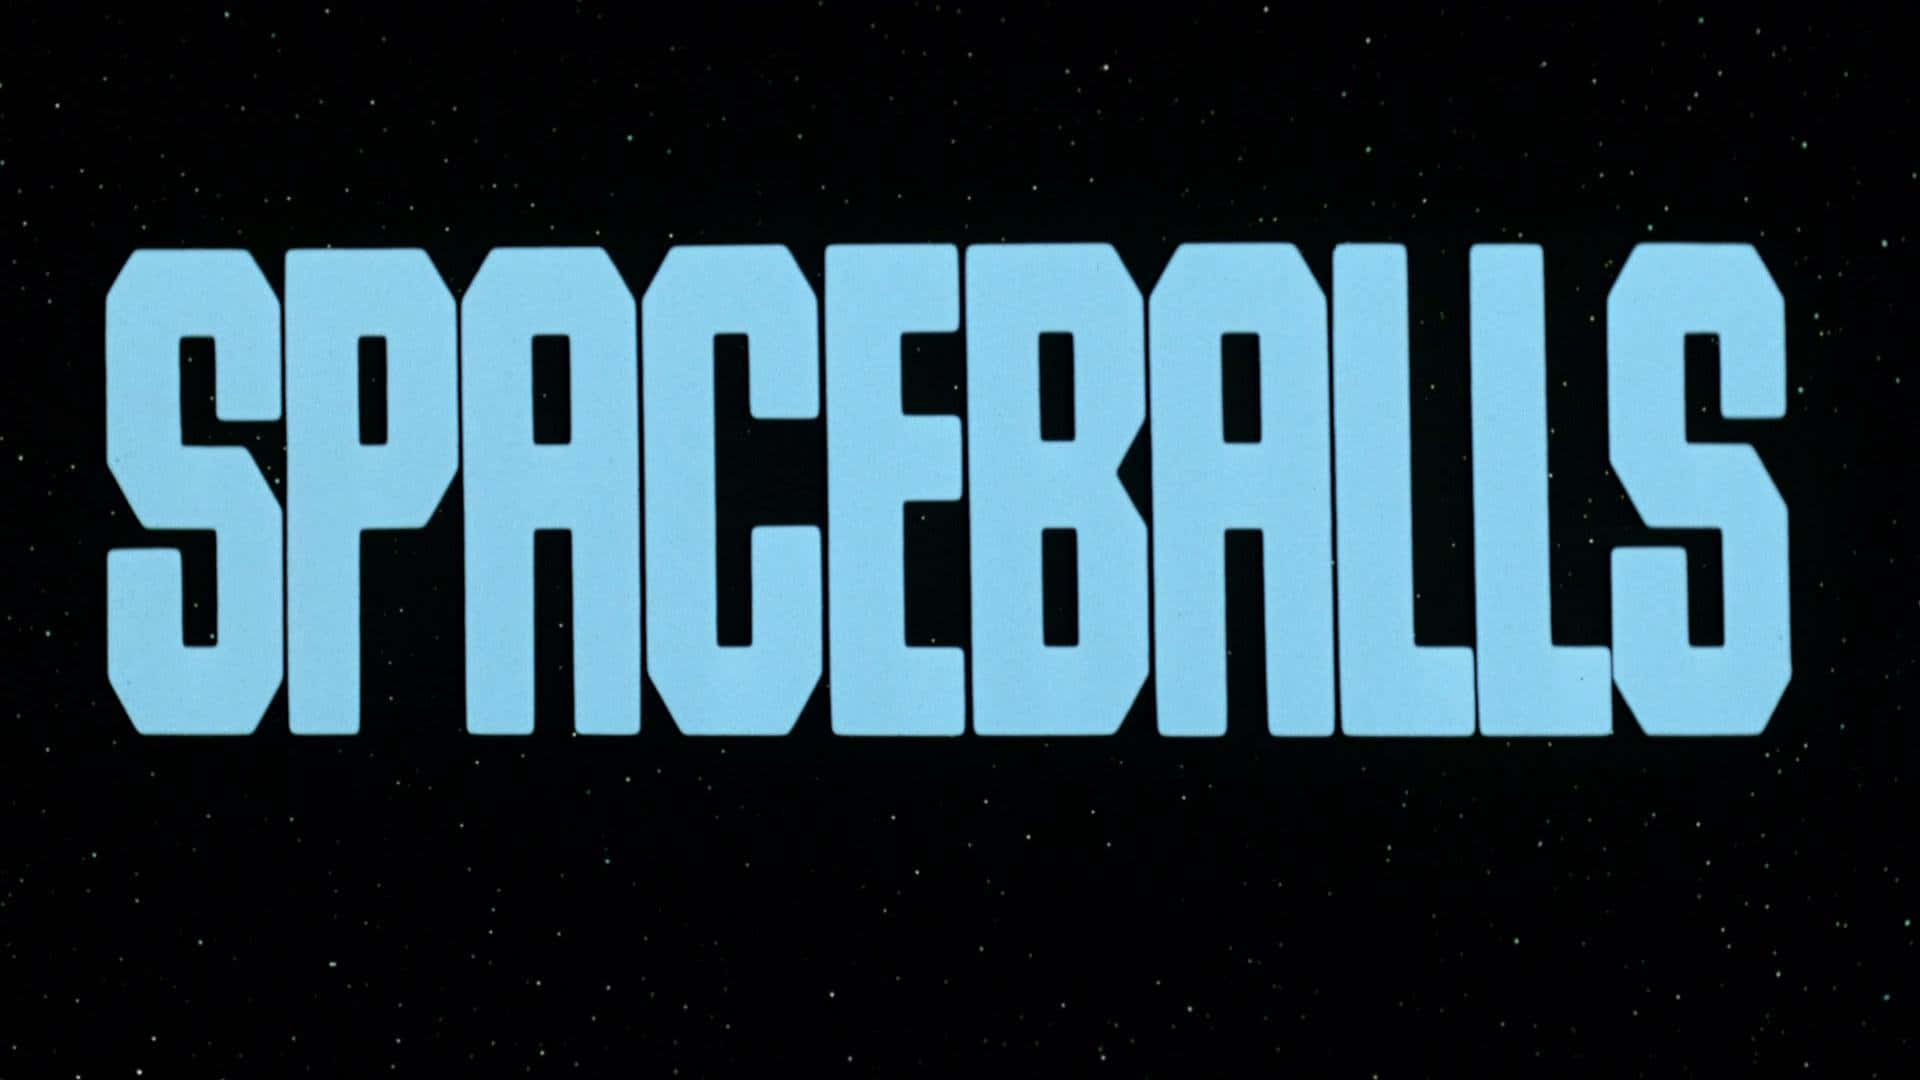 "Spaceballs: The parody that soared!" Wallpaper